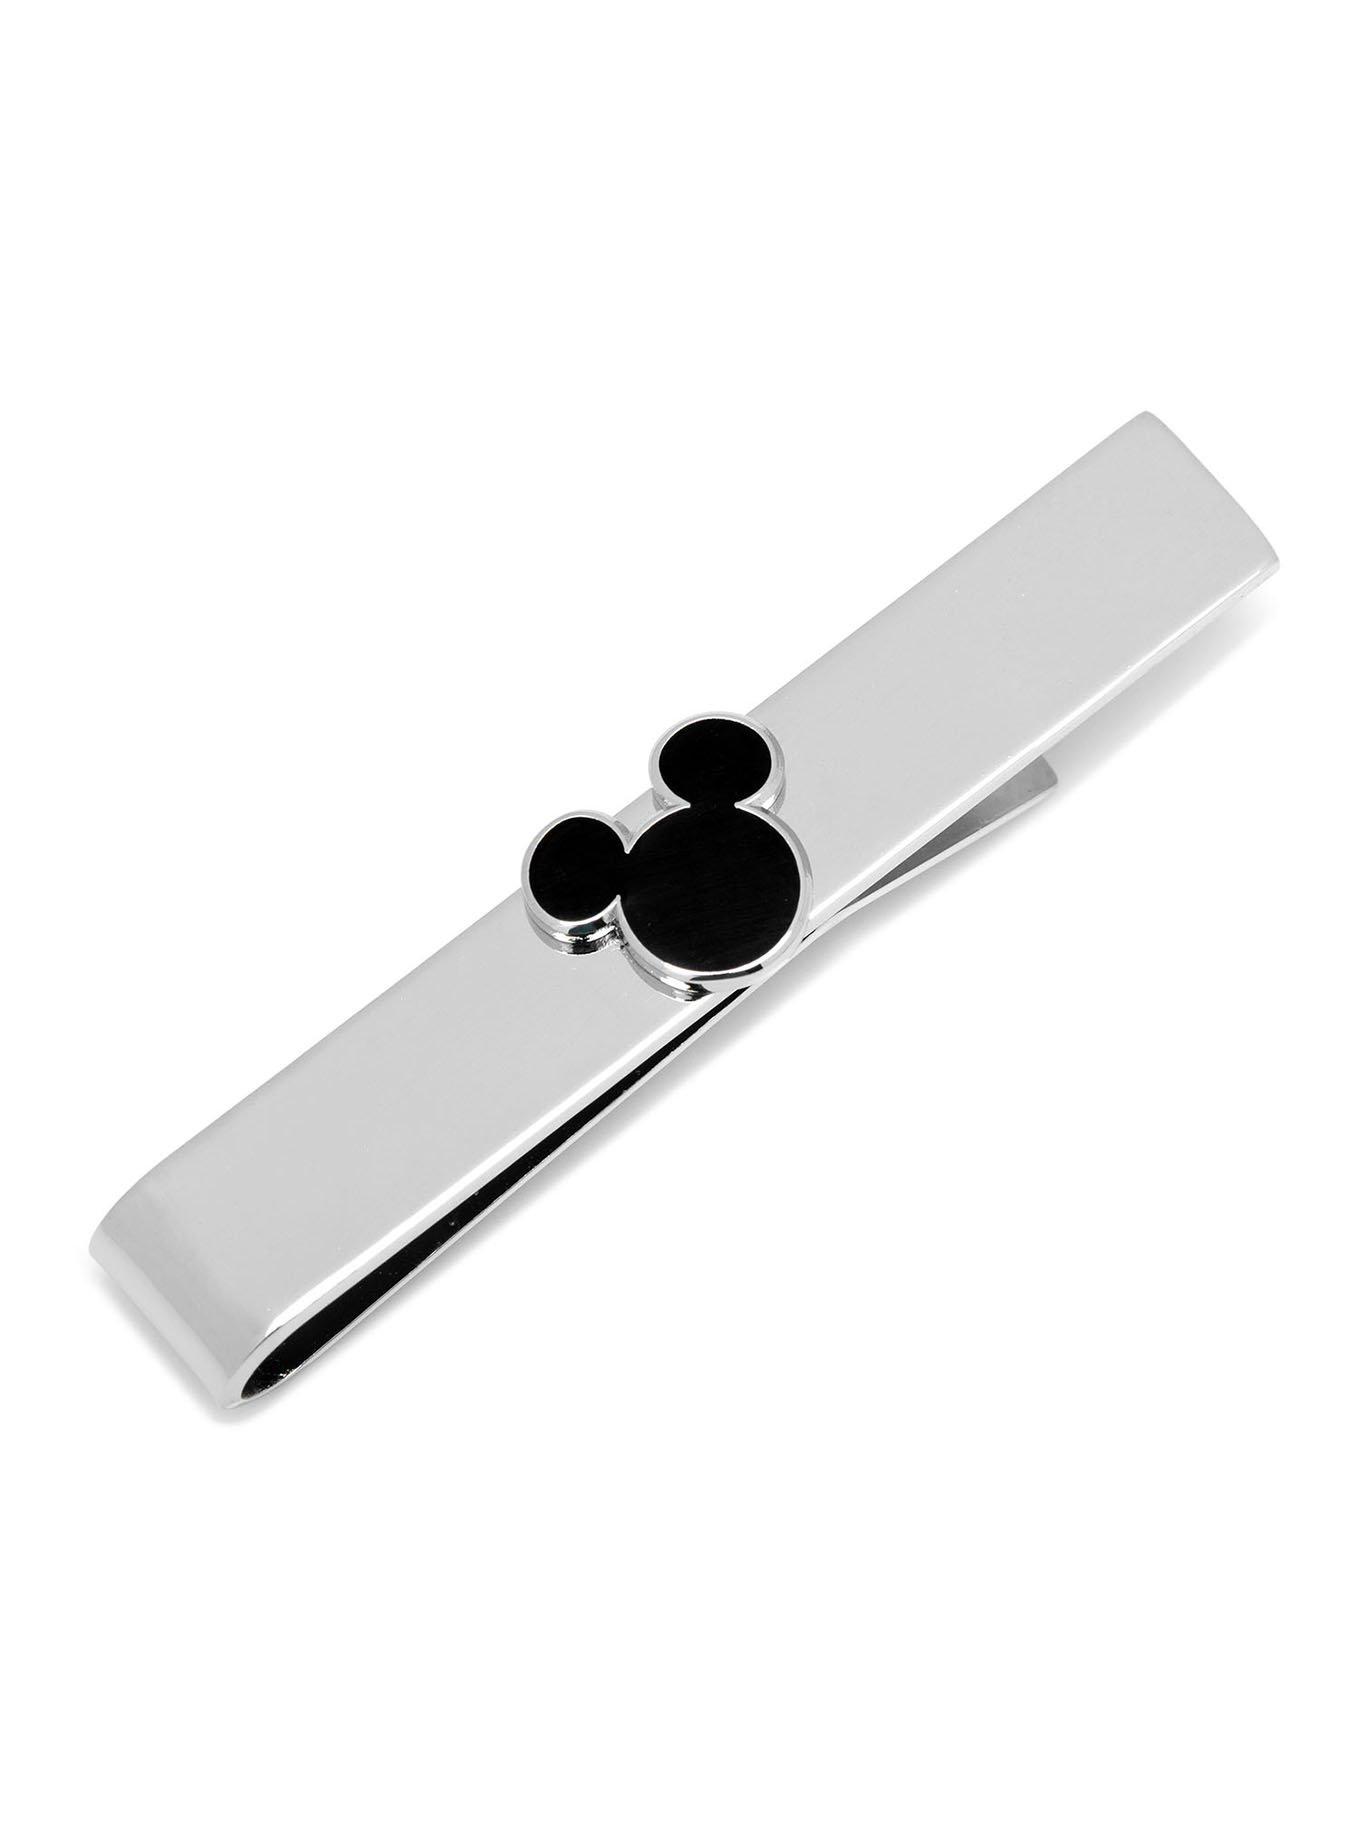 Disney Mickey Mouse Black Silhouette Tie Bar